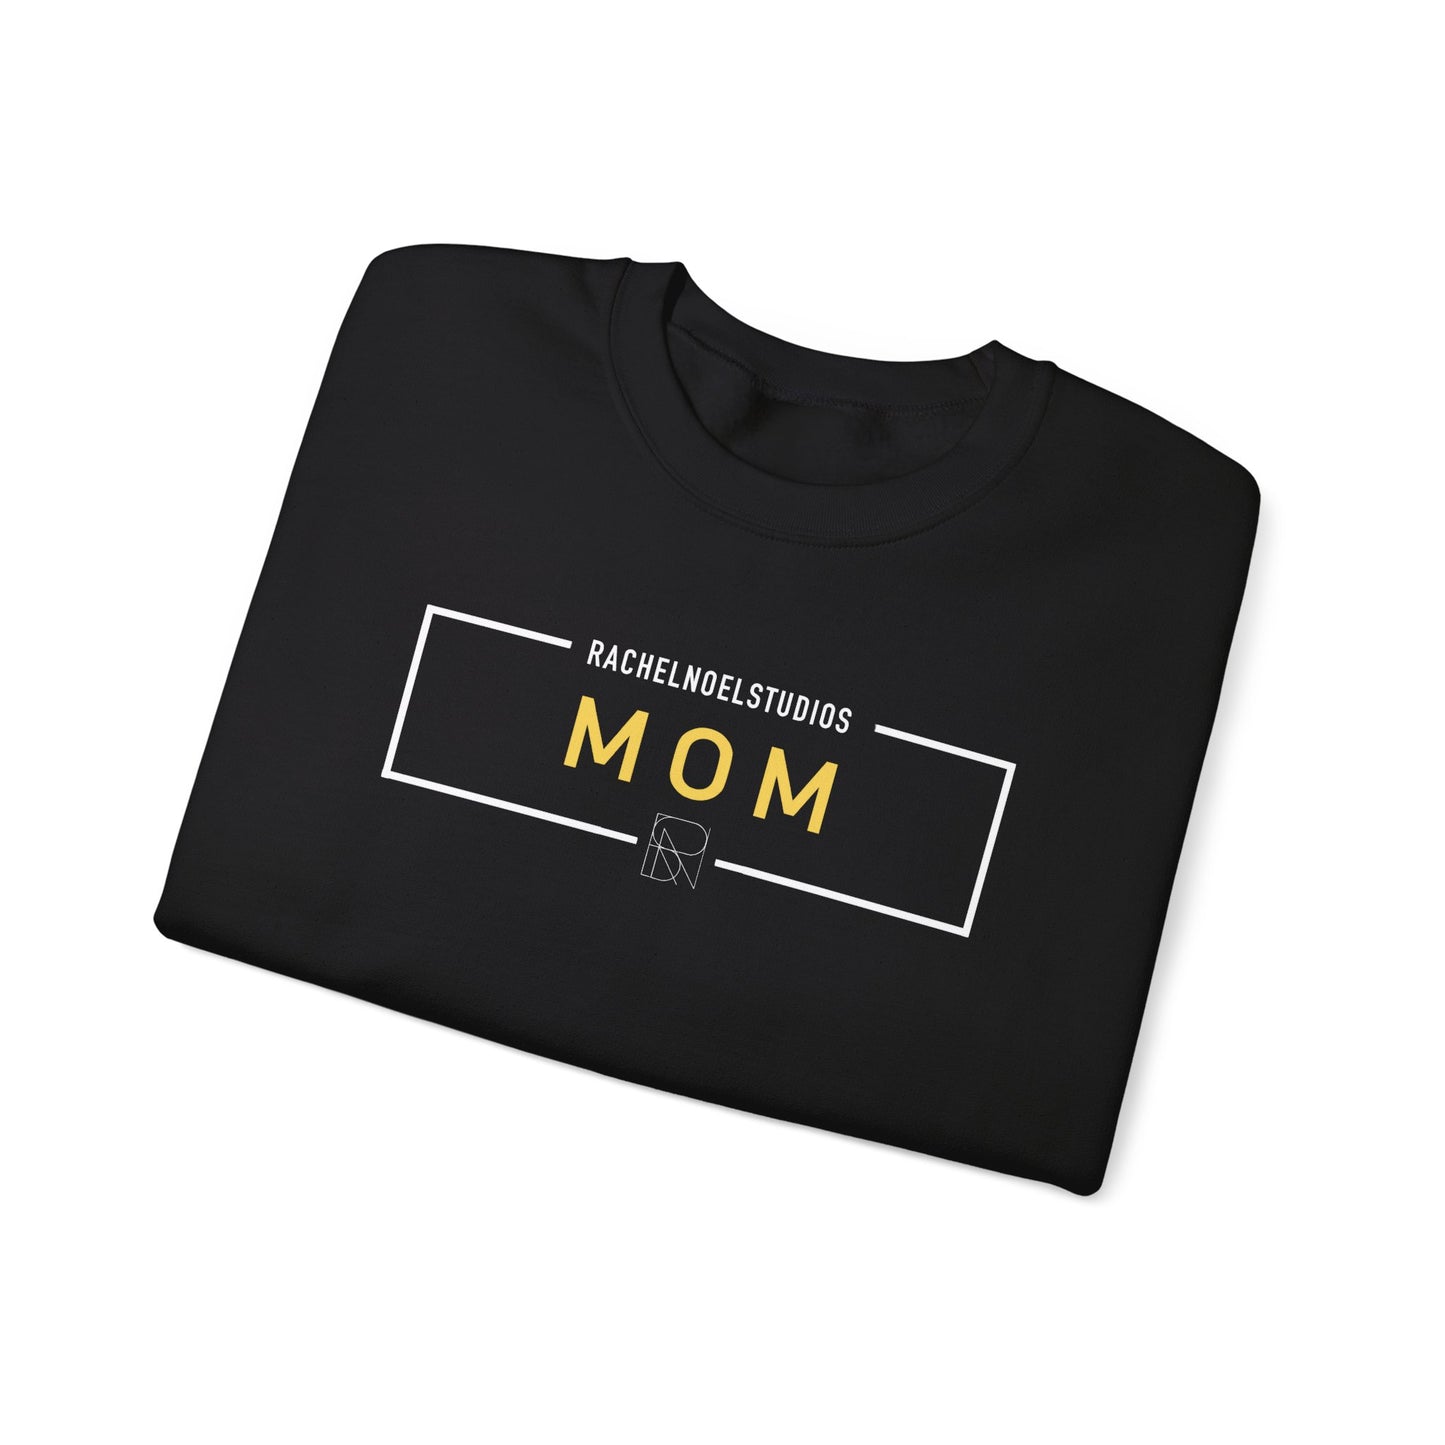 “Mom” RNS Unisex Crewneck Sweatshirt